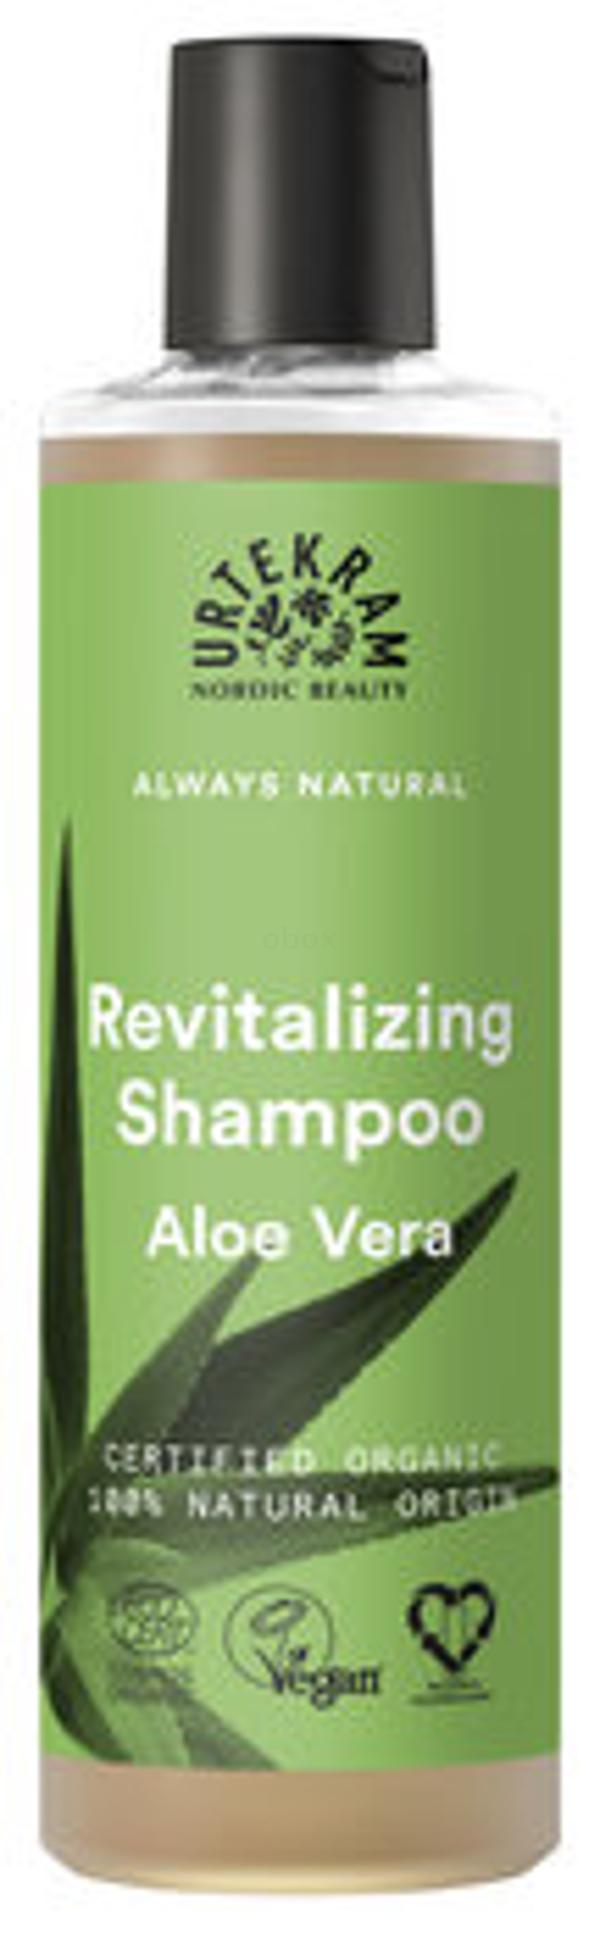 Produktfoto zu Aloe Vera Shampoo normales Haar 250g